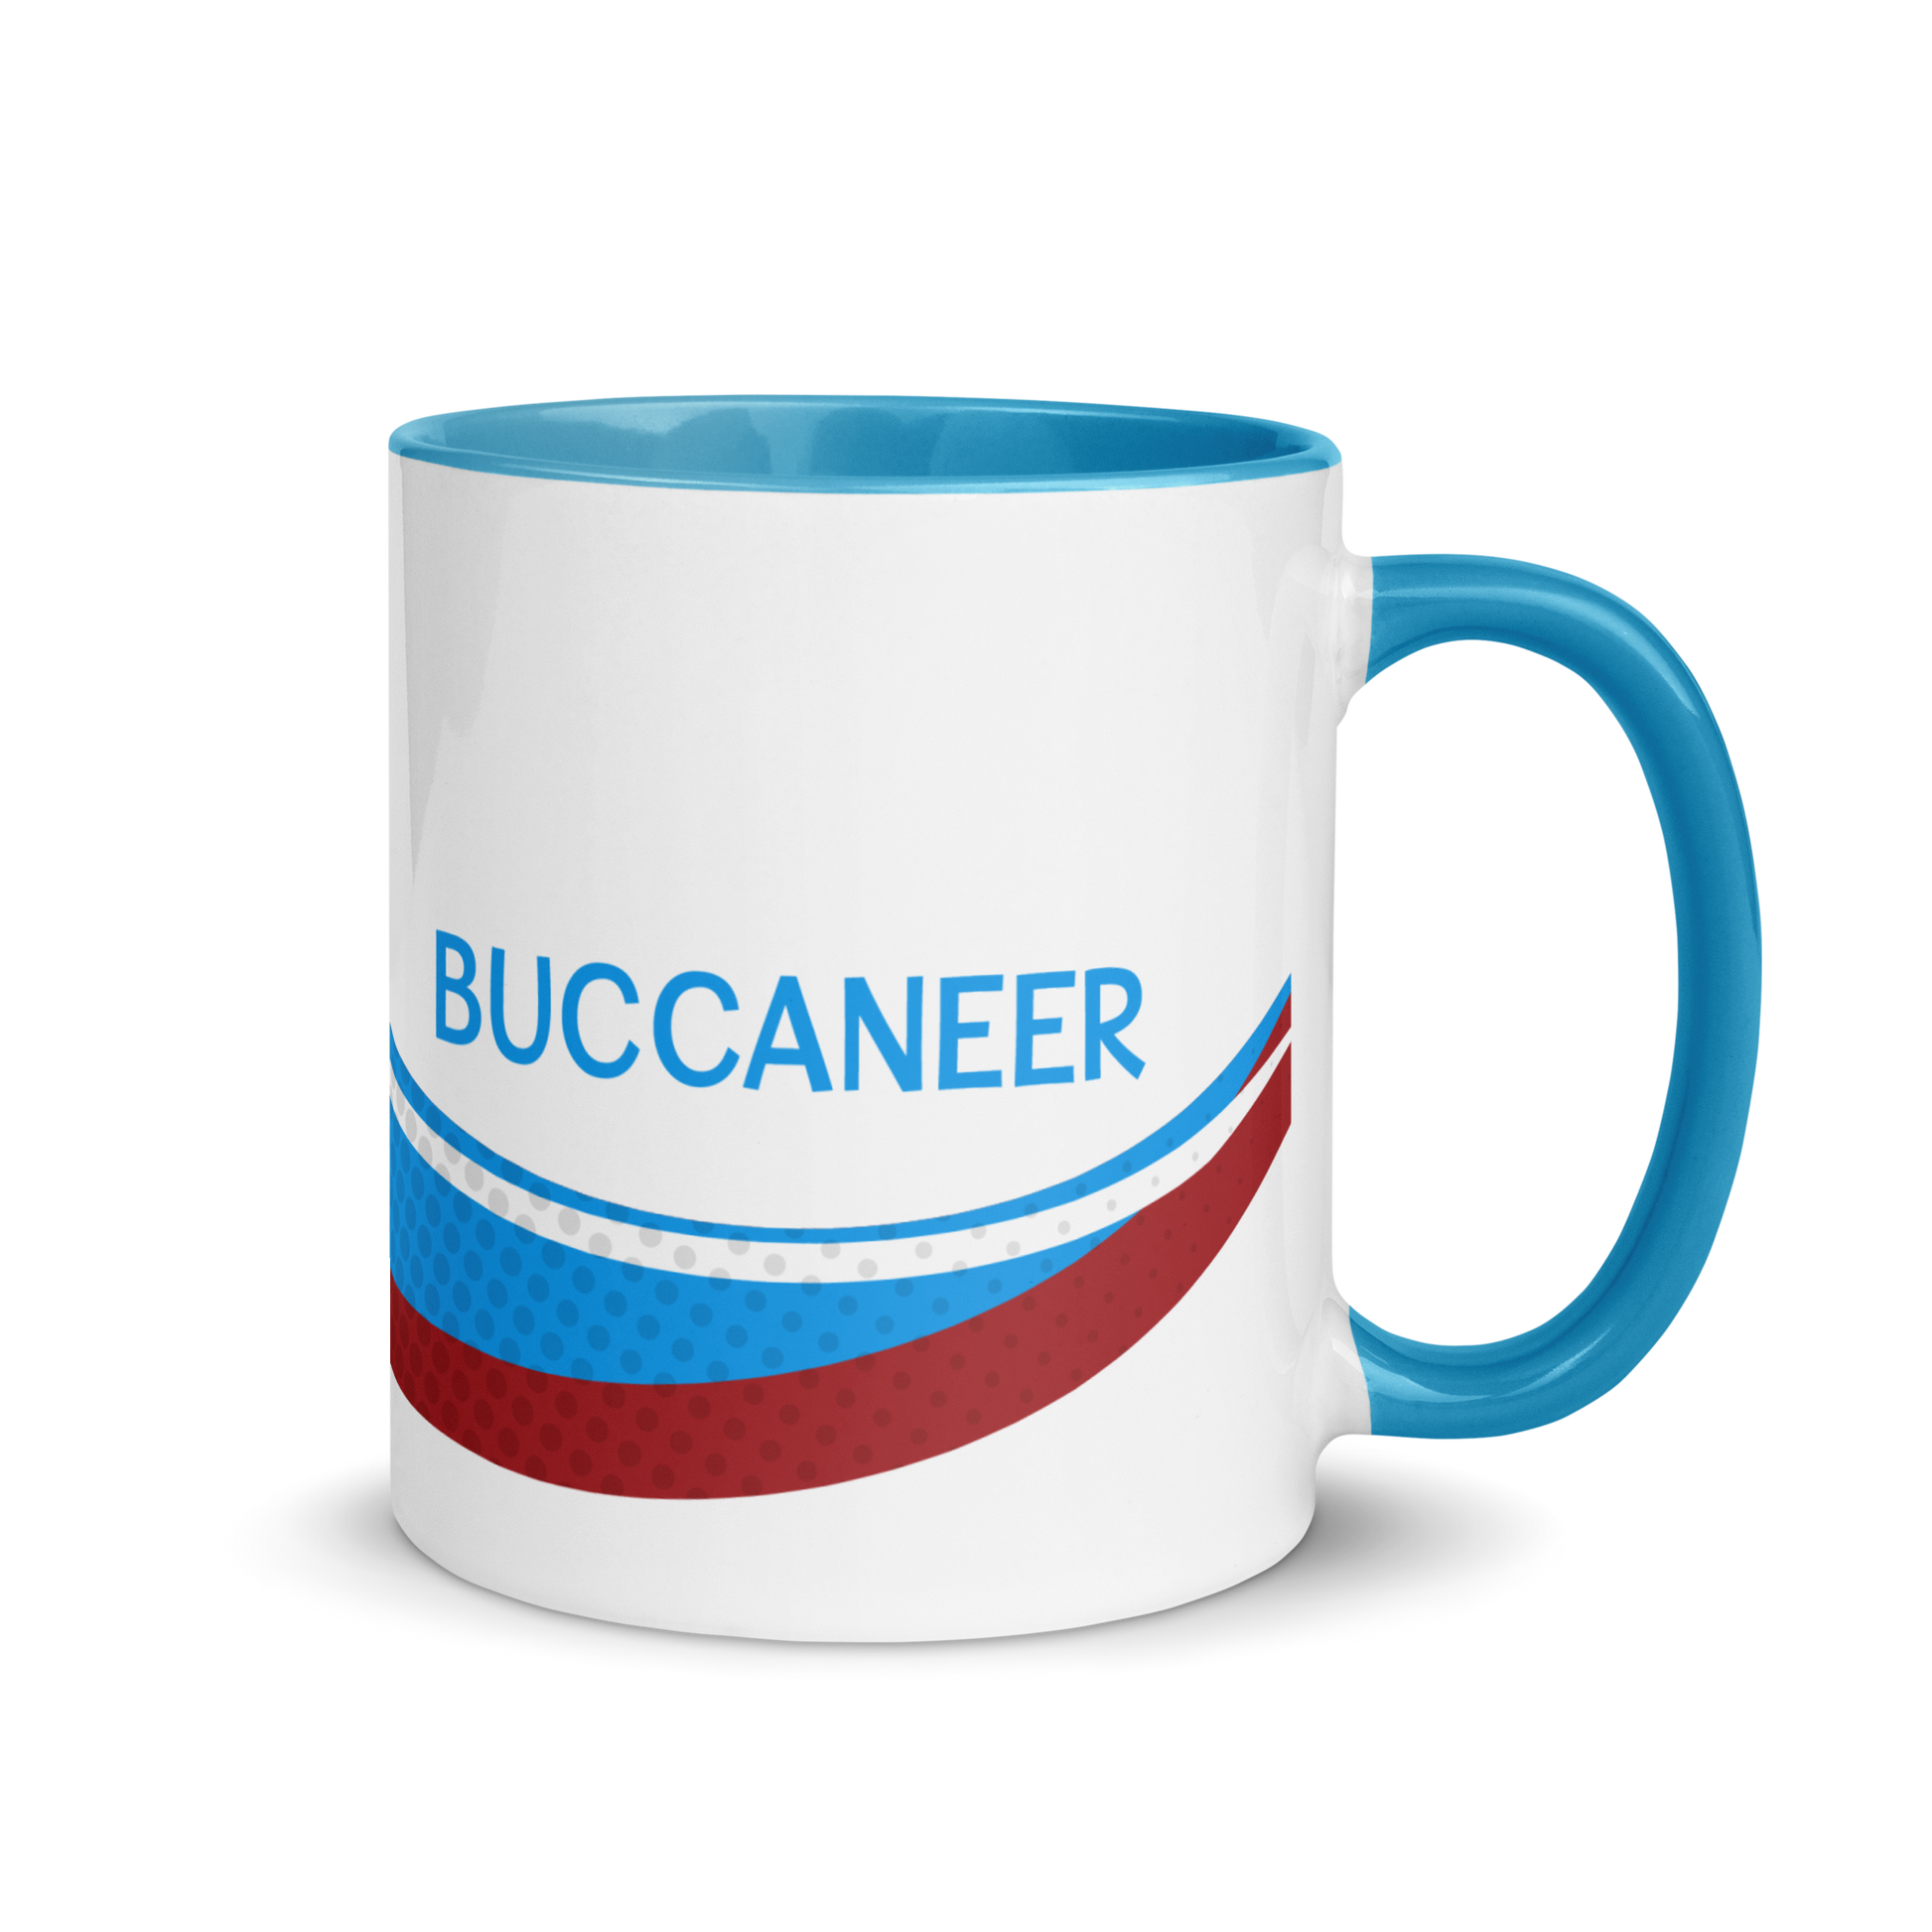 Pirate101-Buccaneer-Mug2-ceramic-coffee